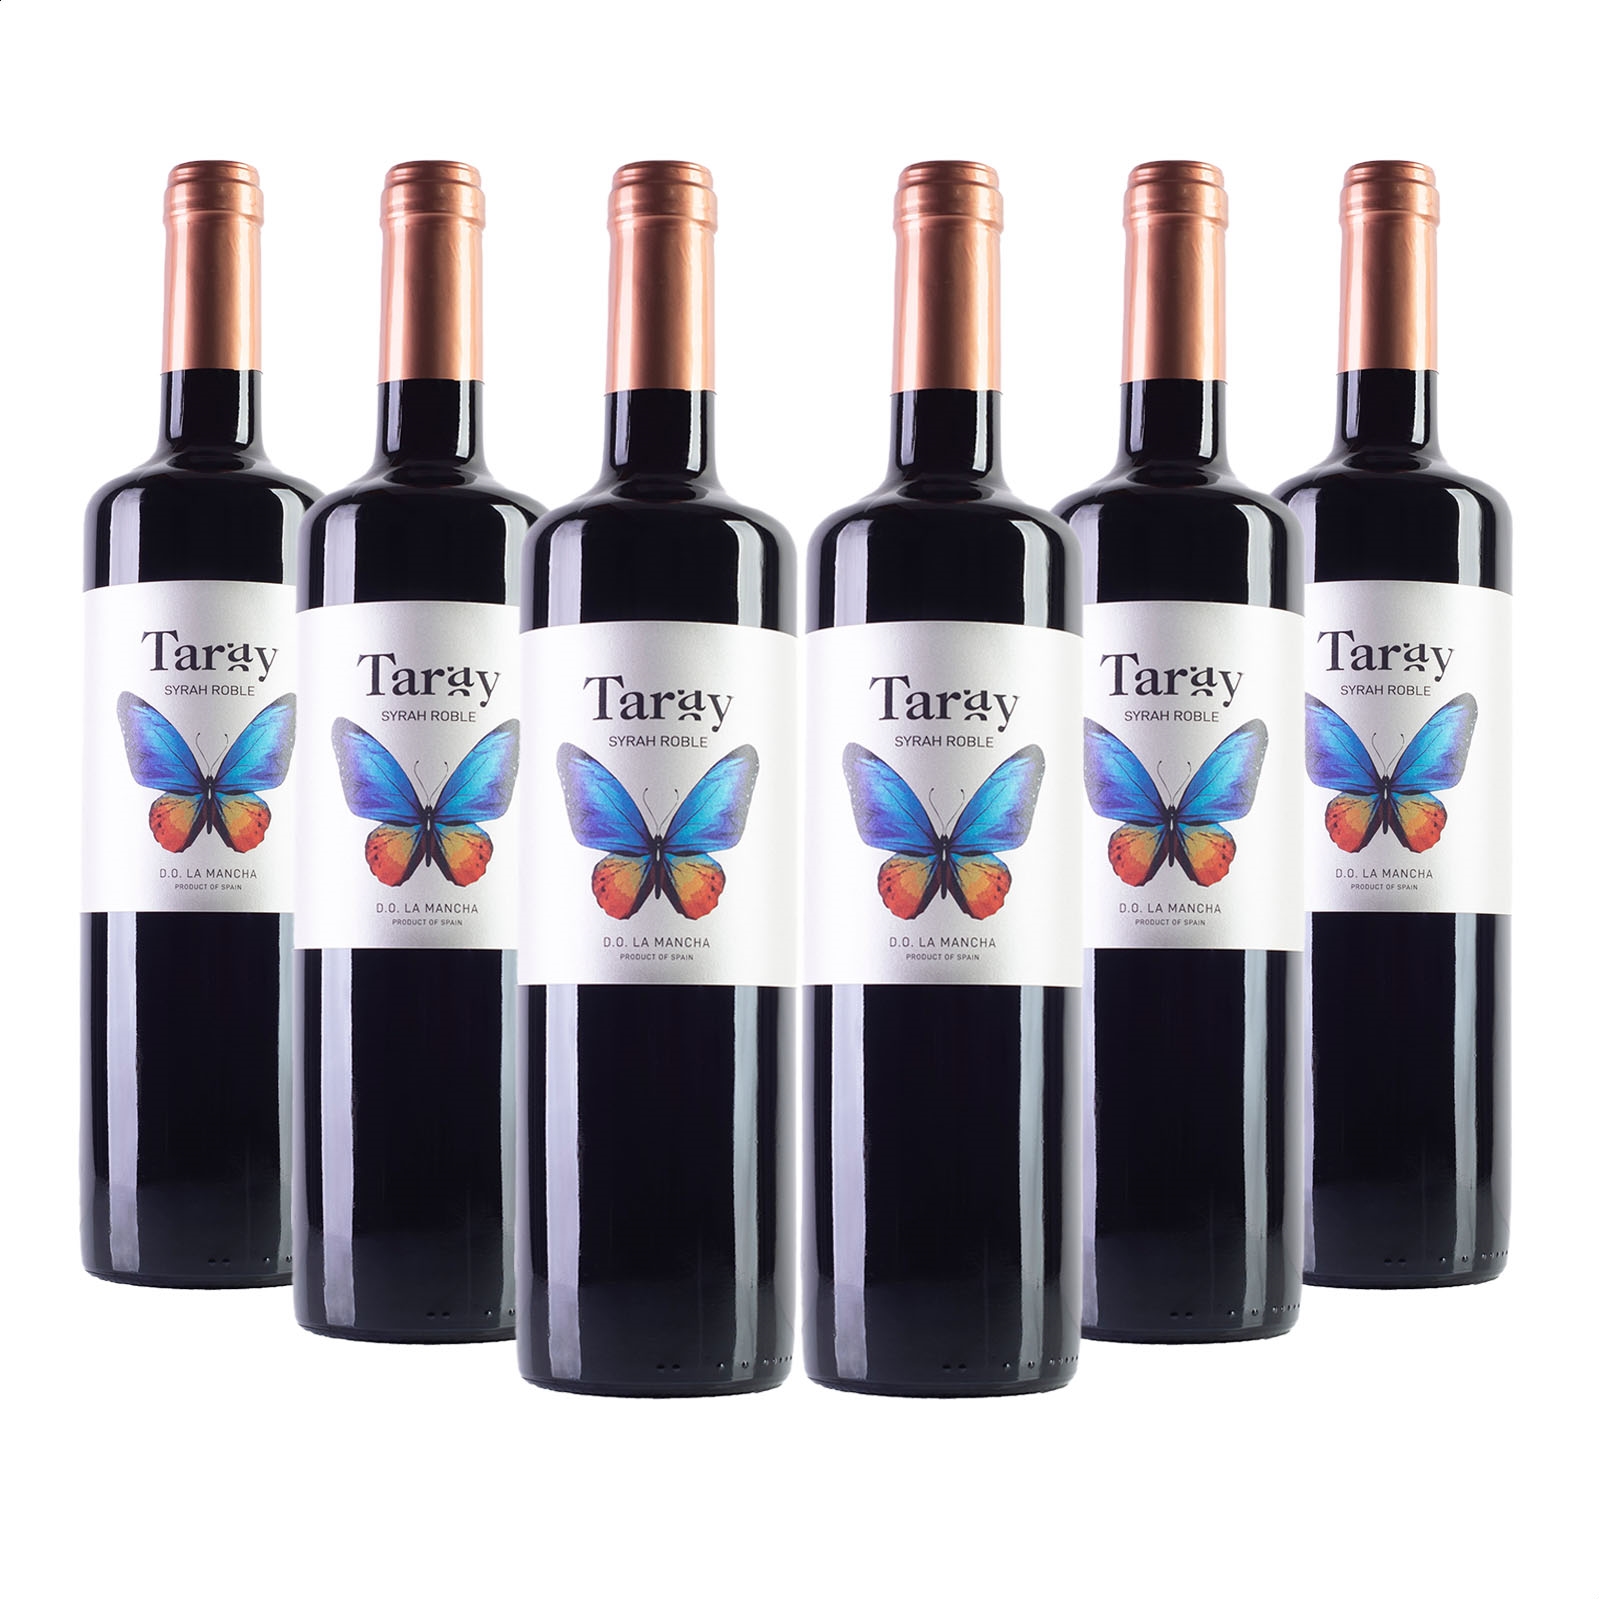 Bodegas Taray – Vino tinto Syrah Roble D.O.P. La Mancha 75cl, 6uds